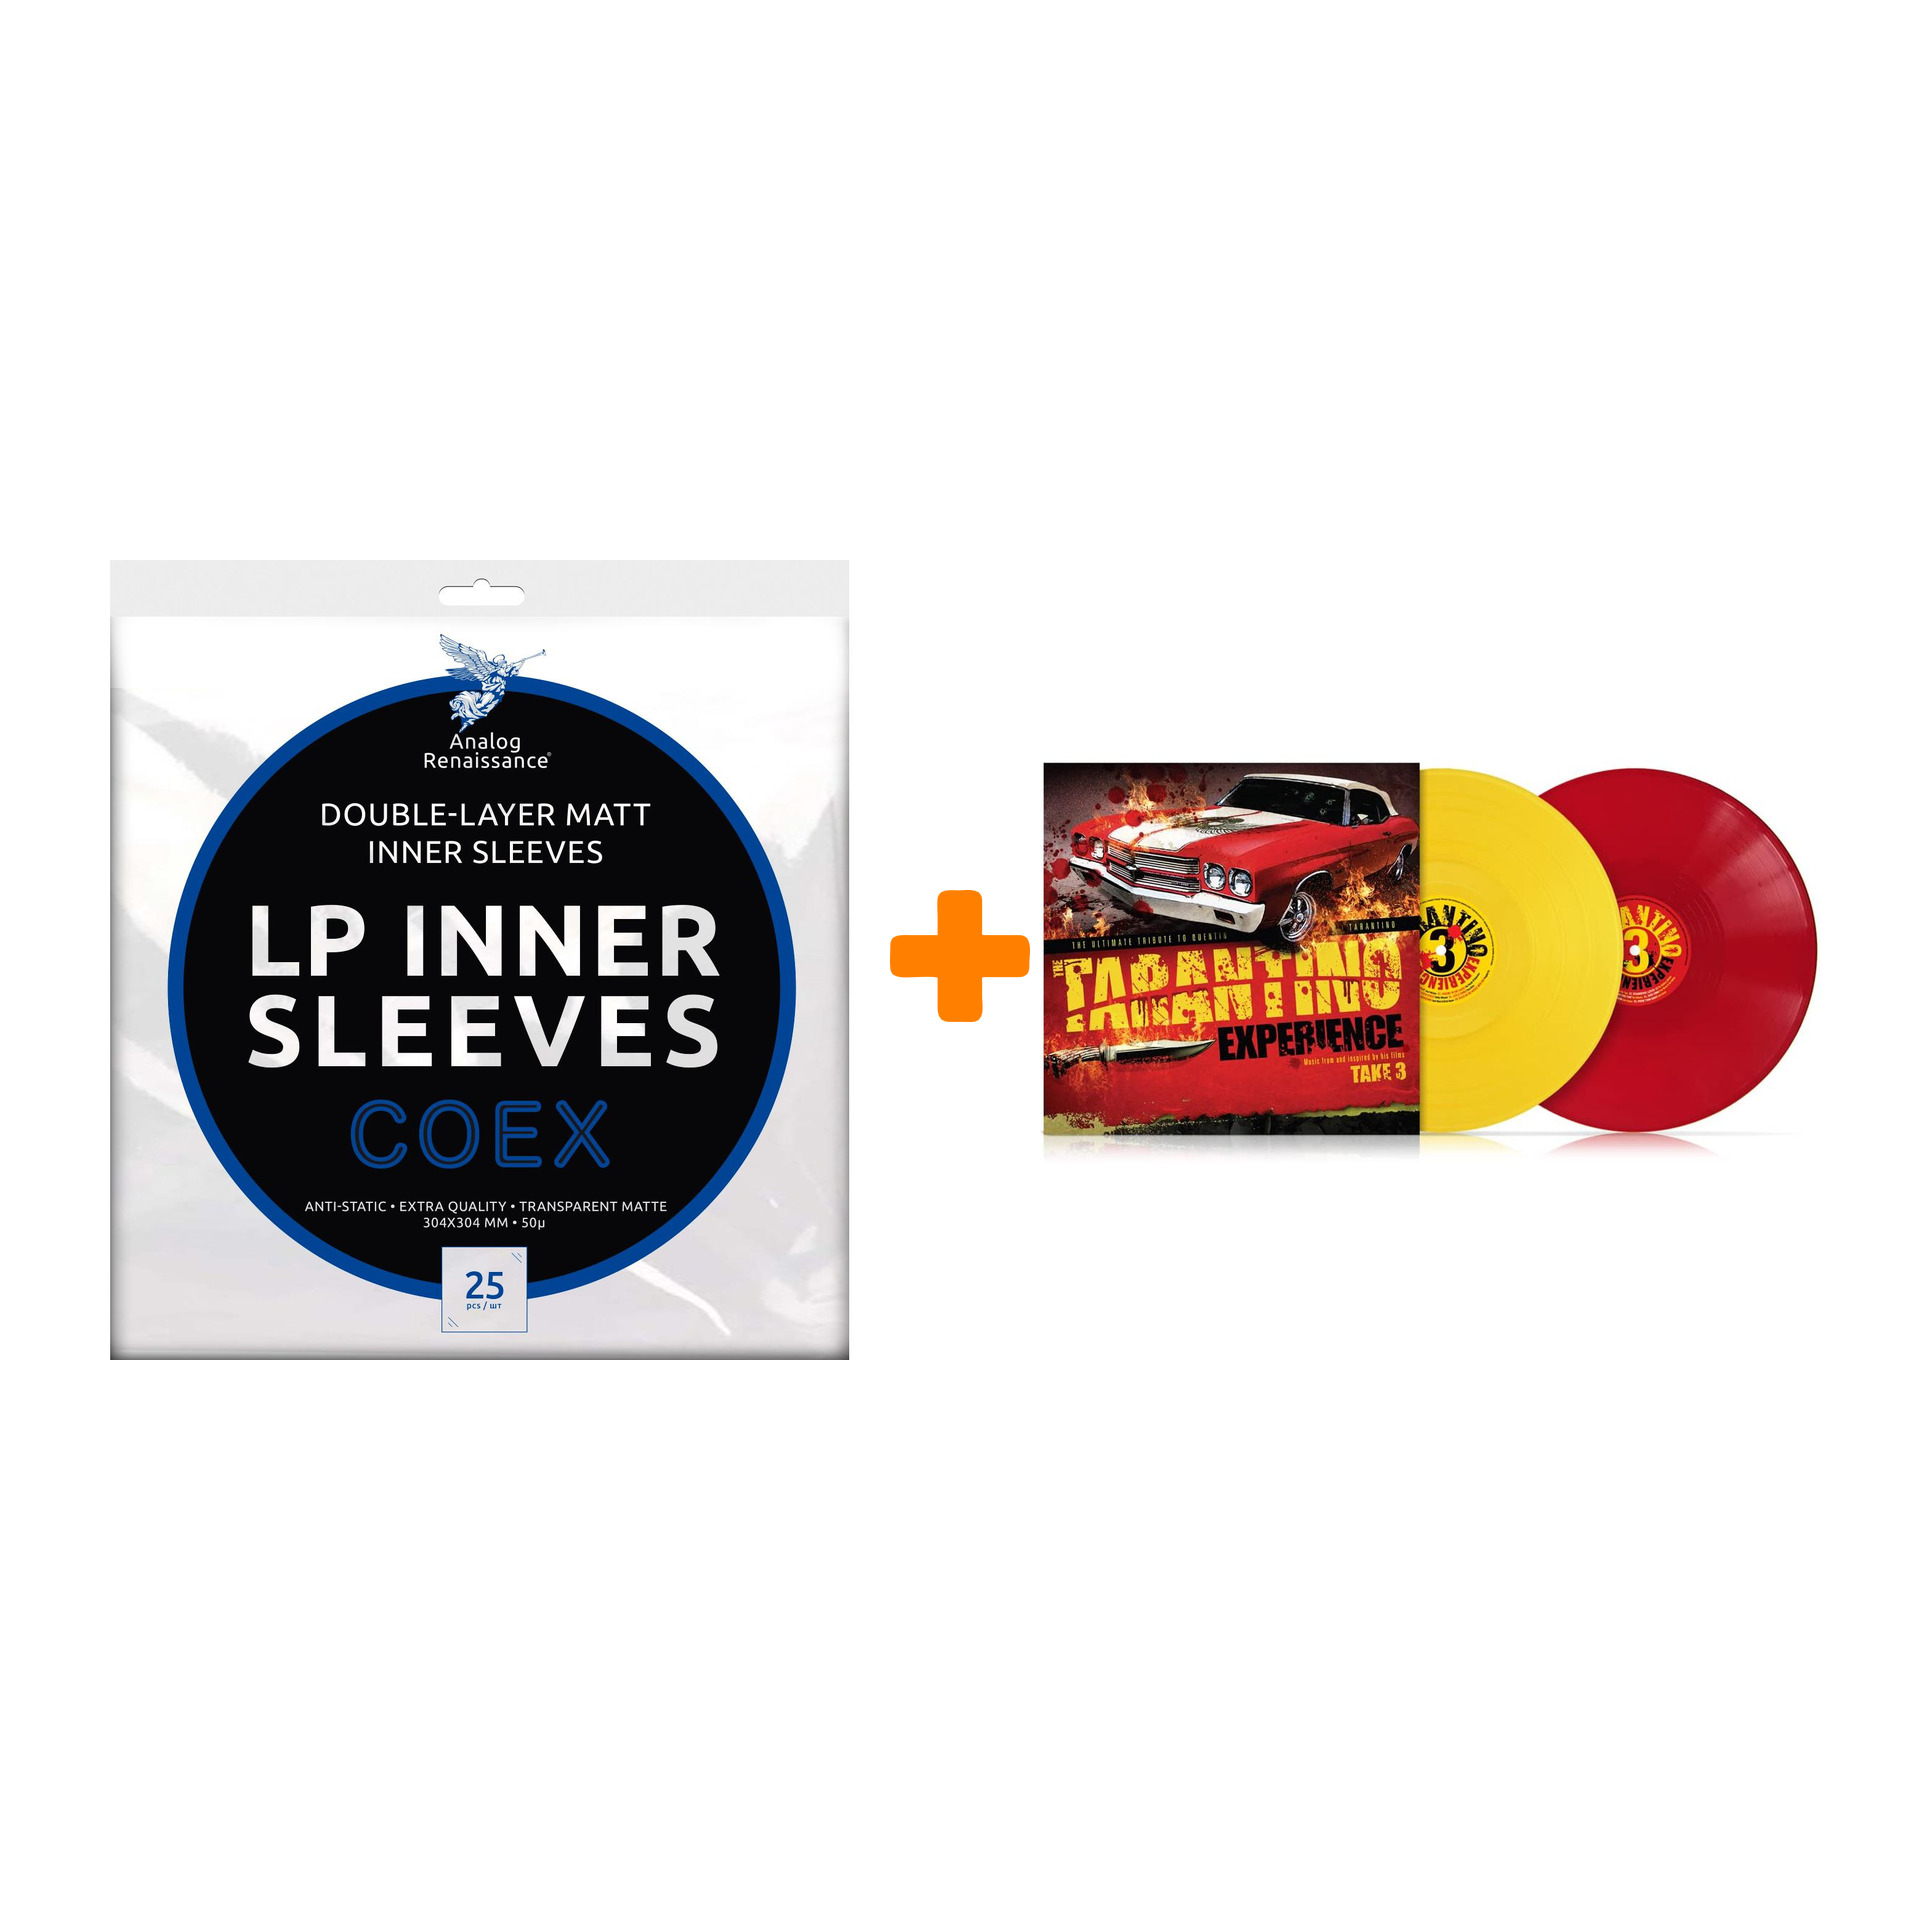 V/A Tarantino Experience Take 3 Coloured Red & Yellow Vinyl 2LP + Конверты внутренние COEX для грампластинок 12 25шт Набор